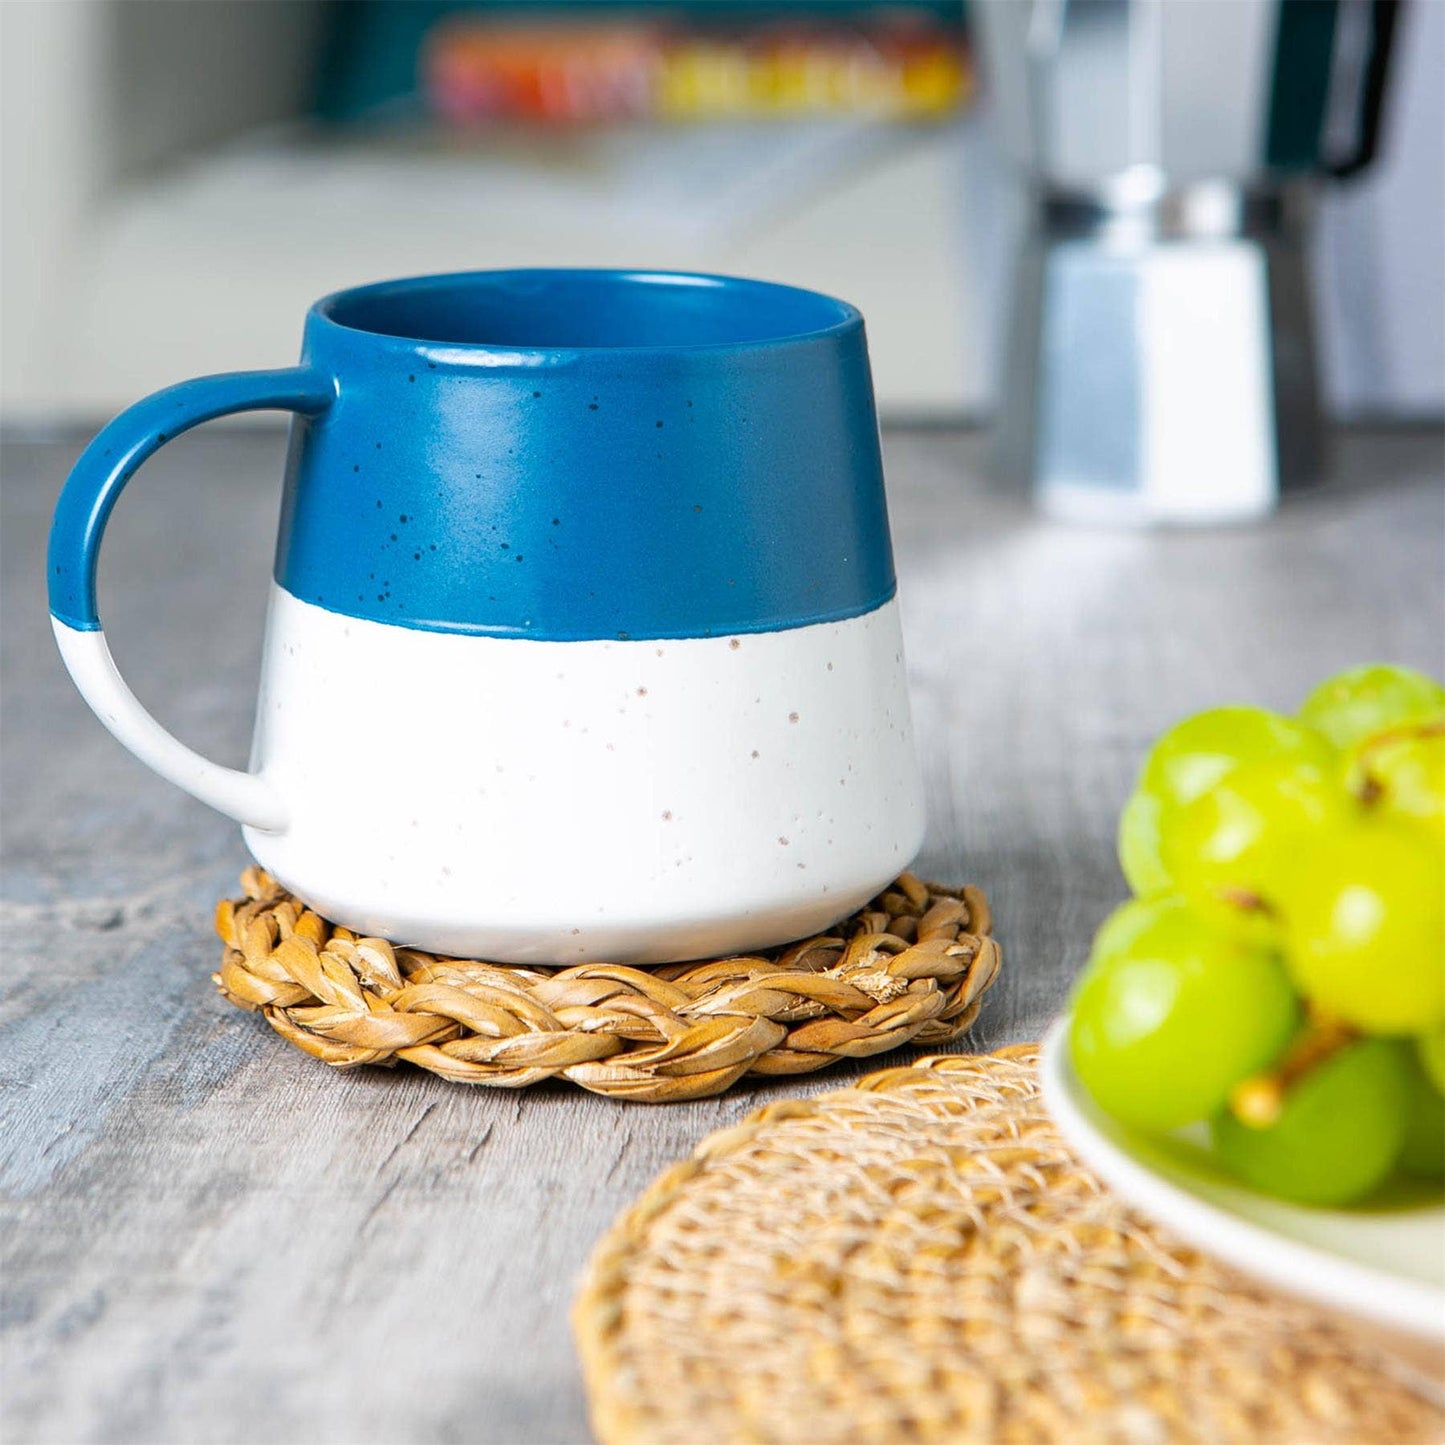 Ceramic Dipped Coffee Mug 370ml Navy